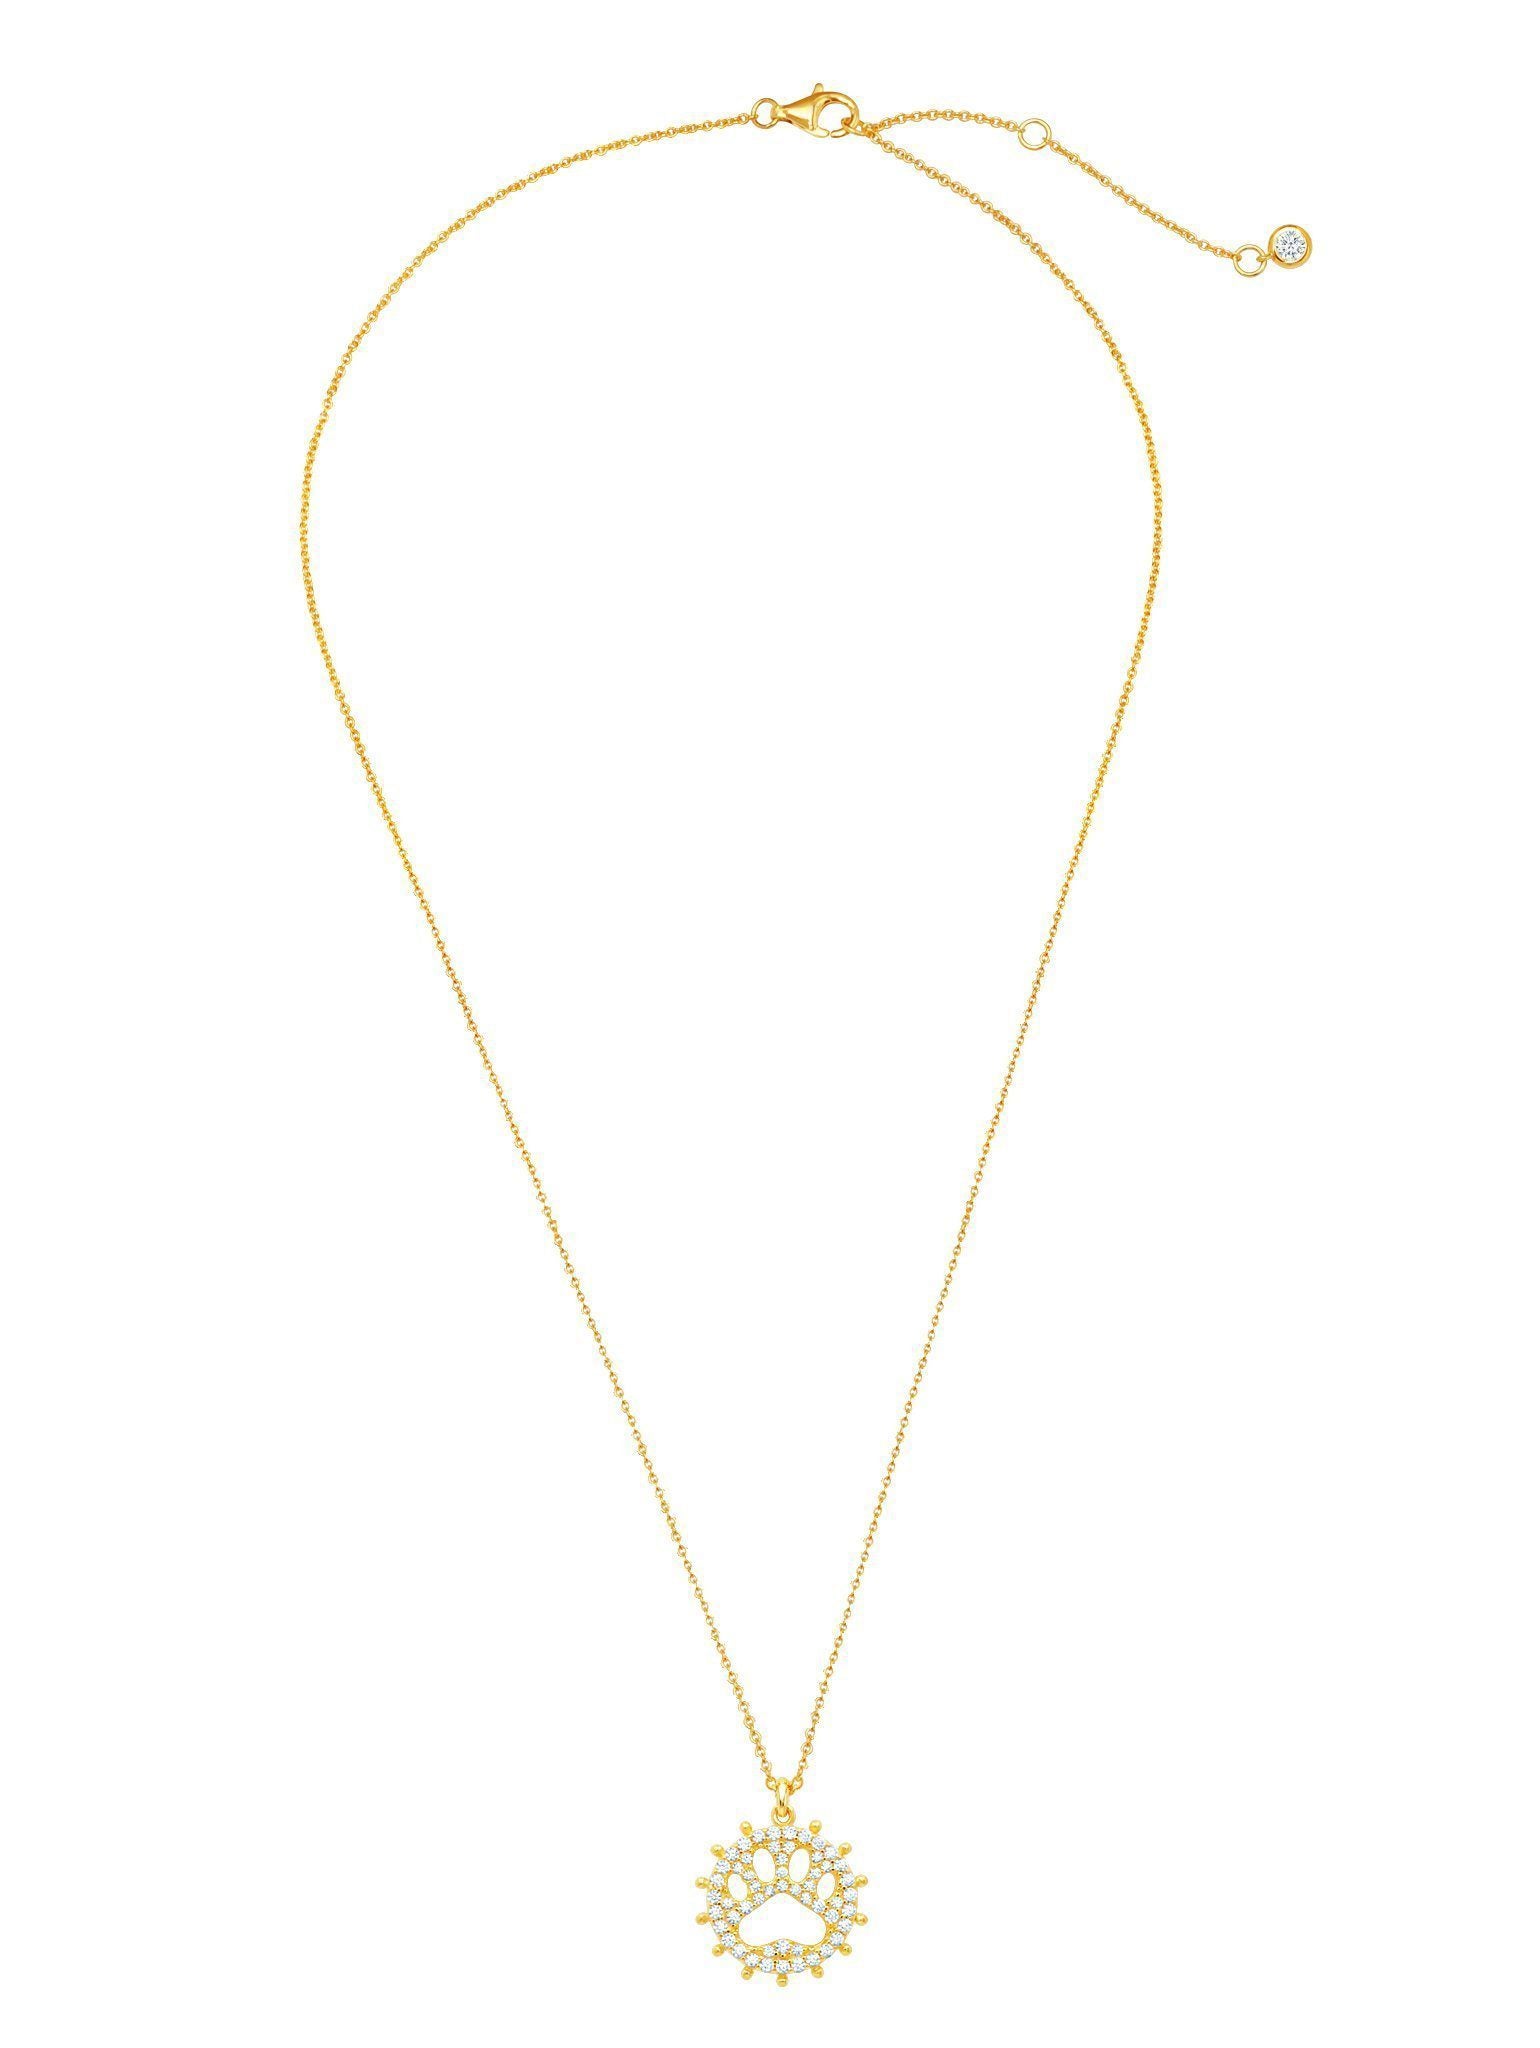 Crislu Jewelry Crislu Motif Paw Print Pendant Necklace finished in 18kt Gold